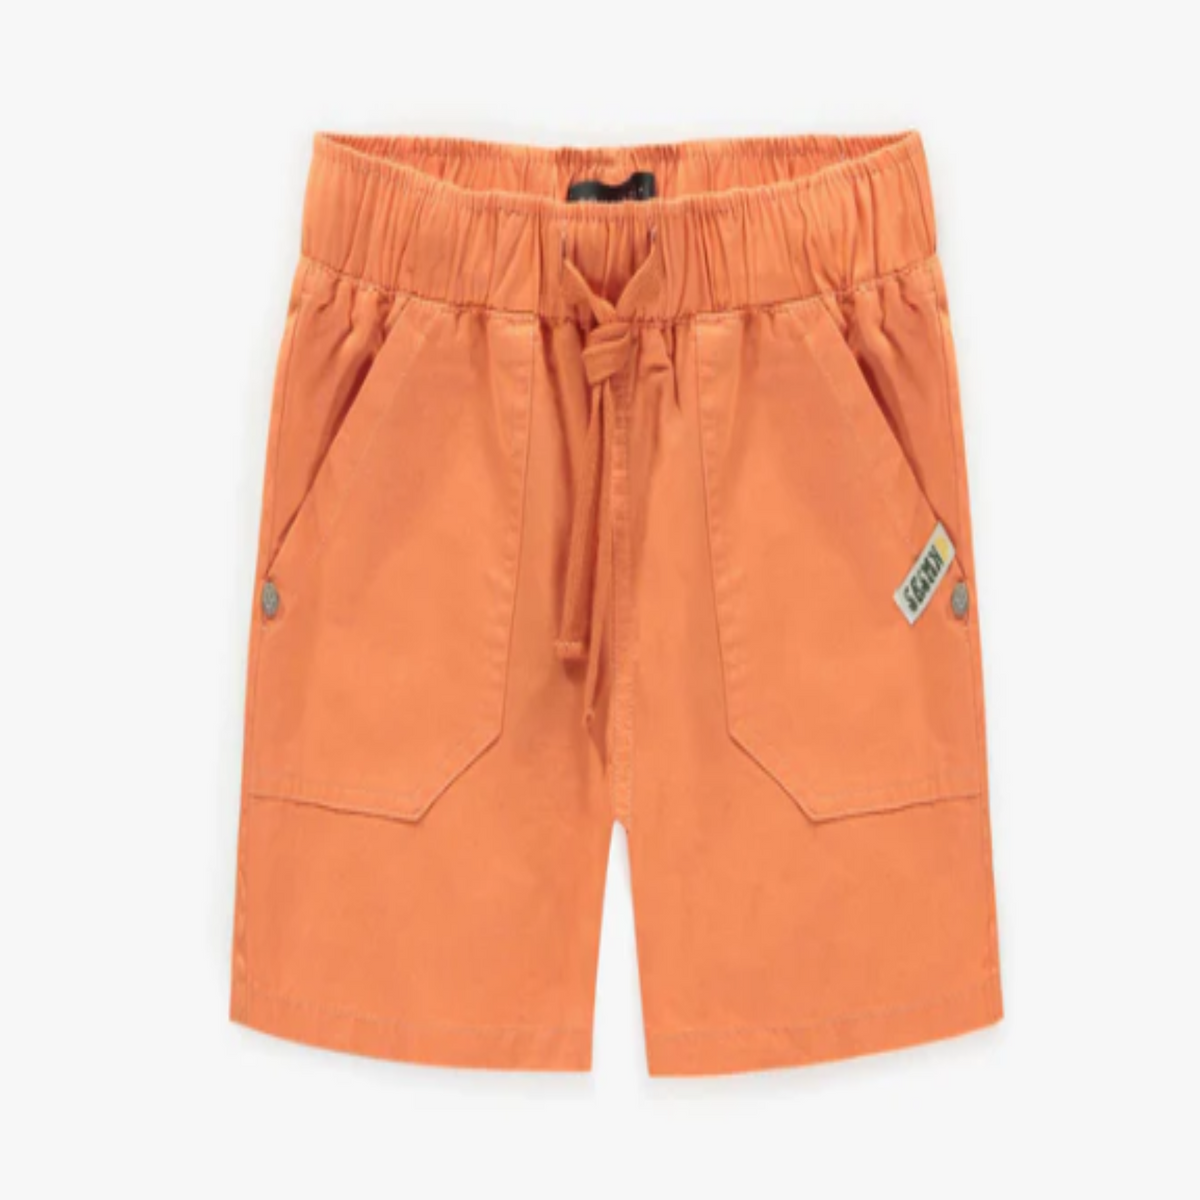 Orange Cotton Bermuda Shorts, Child